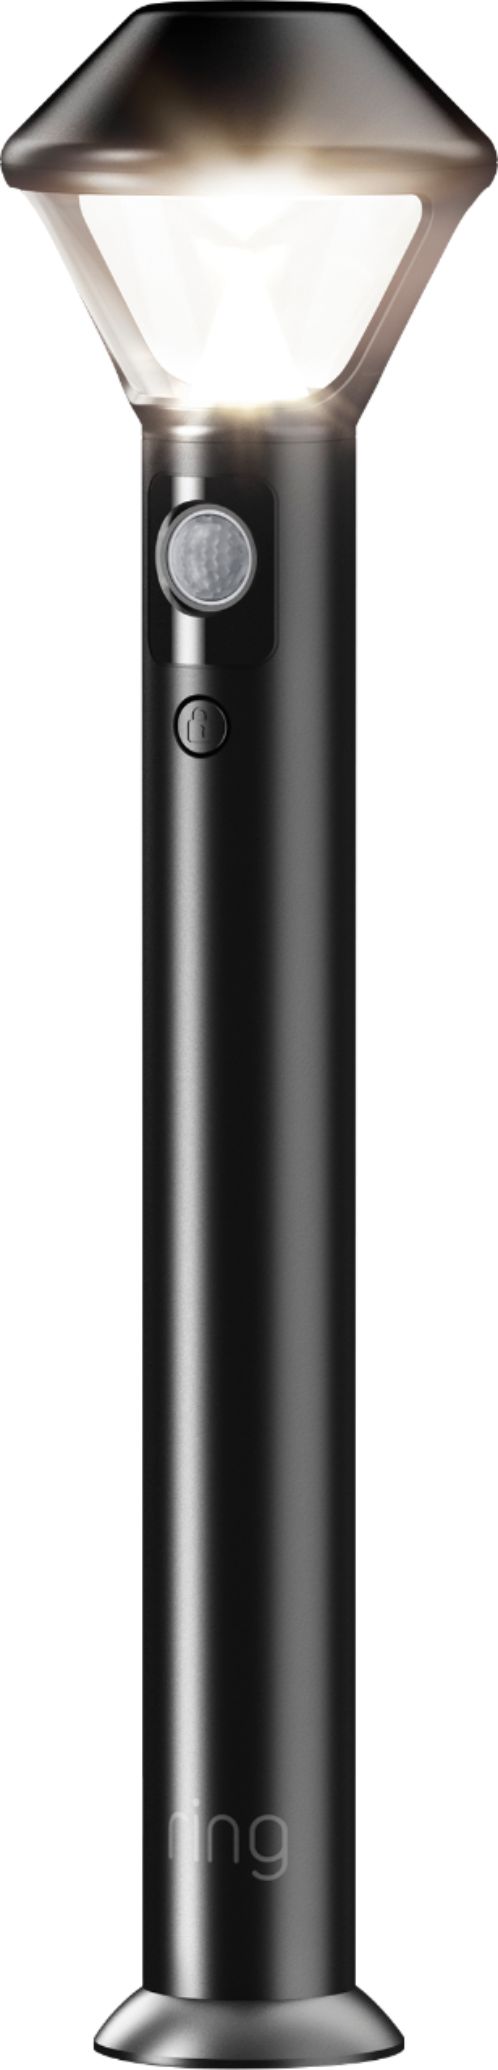 Ring Smart Lighting Motion-Activated Pathlight Black 5LP1Y8-BEN0 - Best Buy